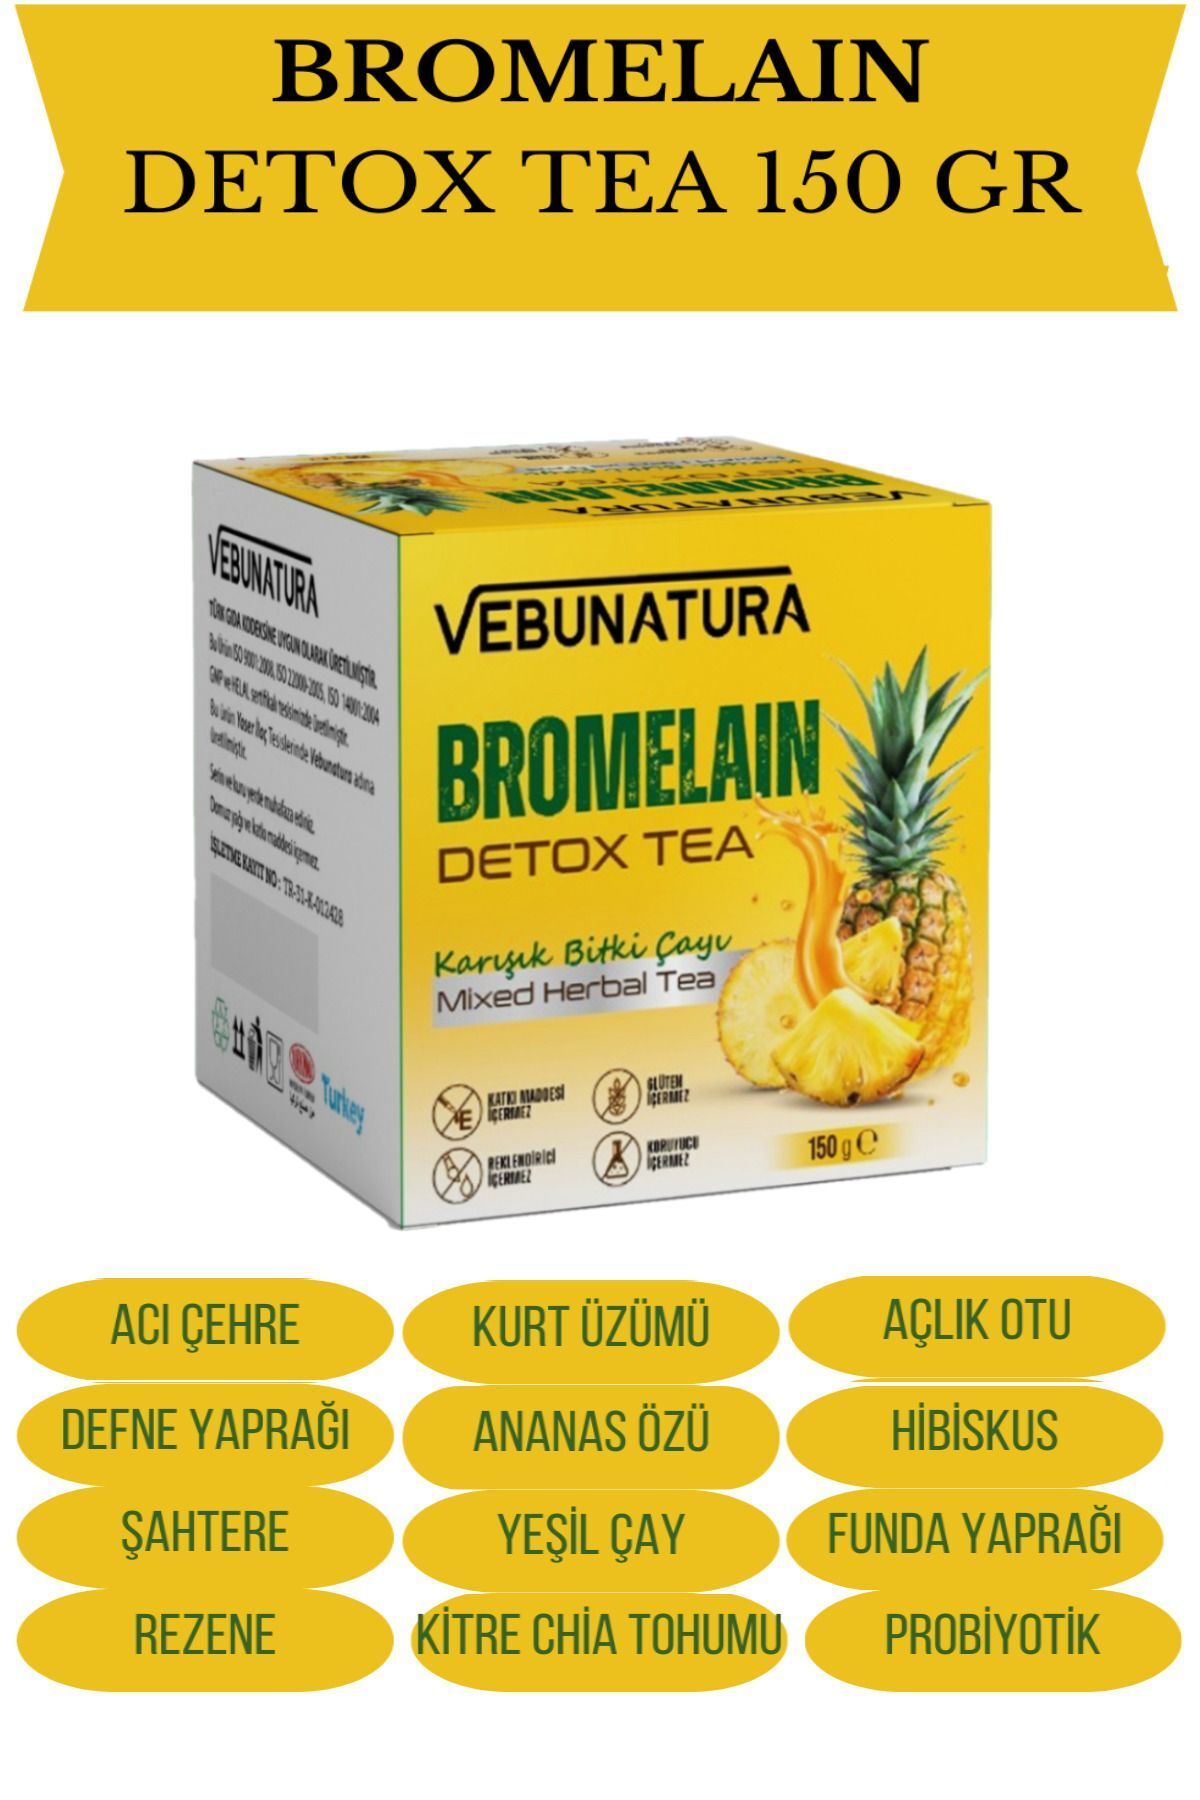 VEBUNATURA Bromelain Detox Tea 150 gr. ve